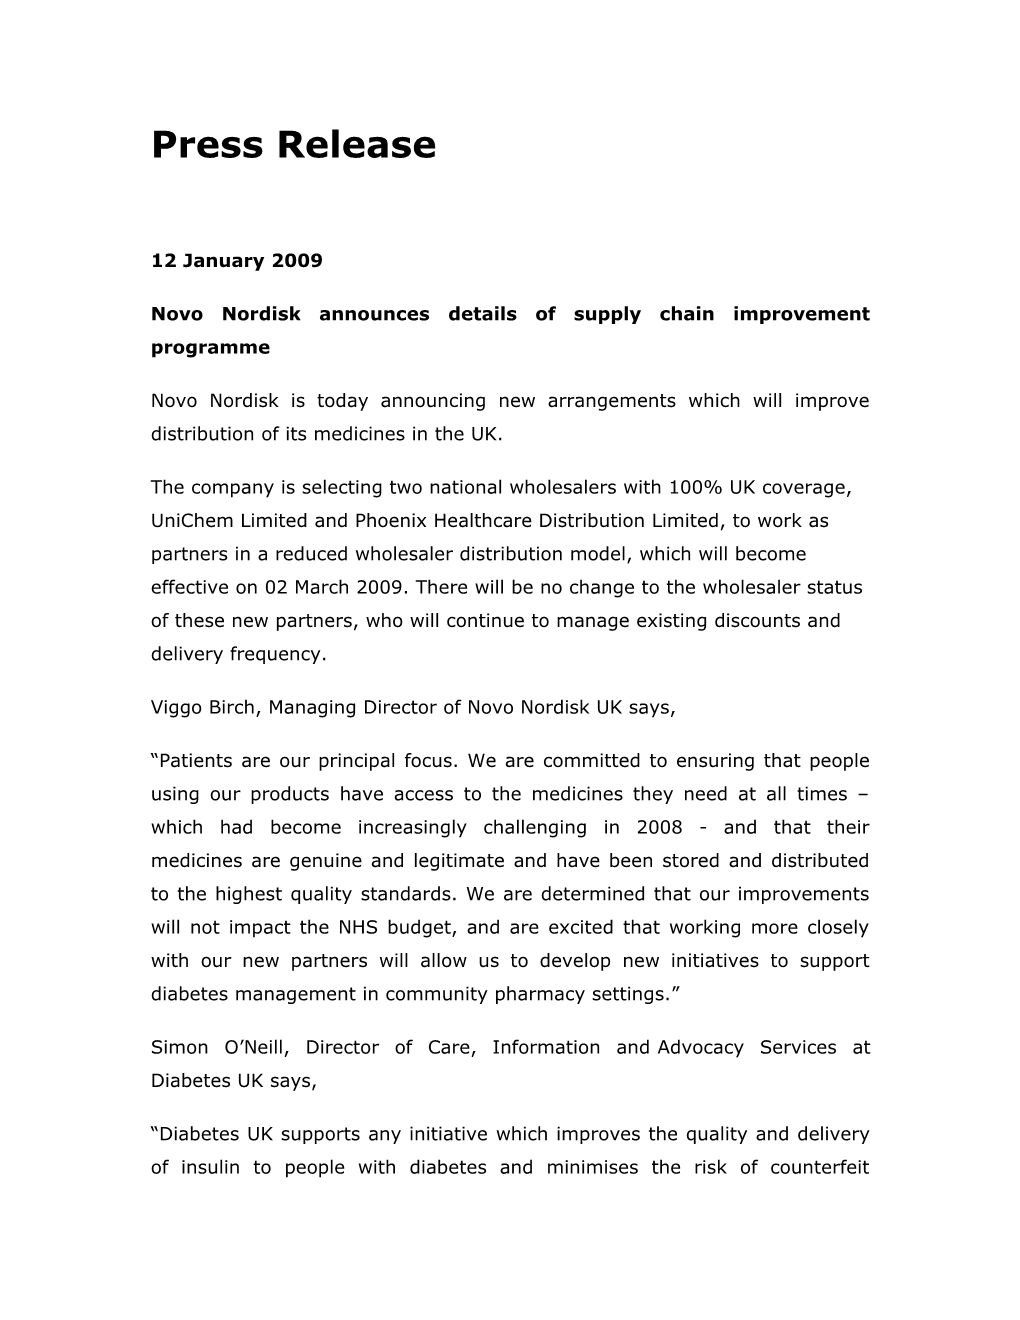 Novo Nordisk Announces Details of Supply Chain Improvement Programme